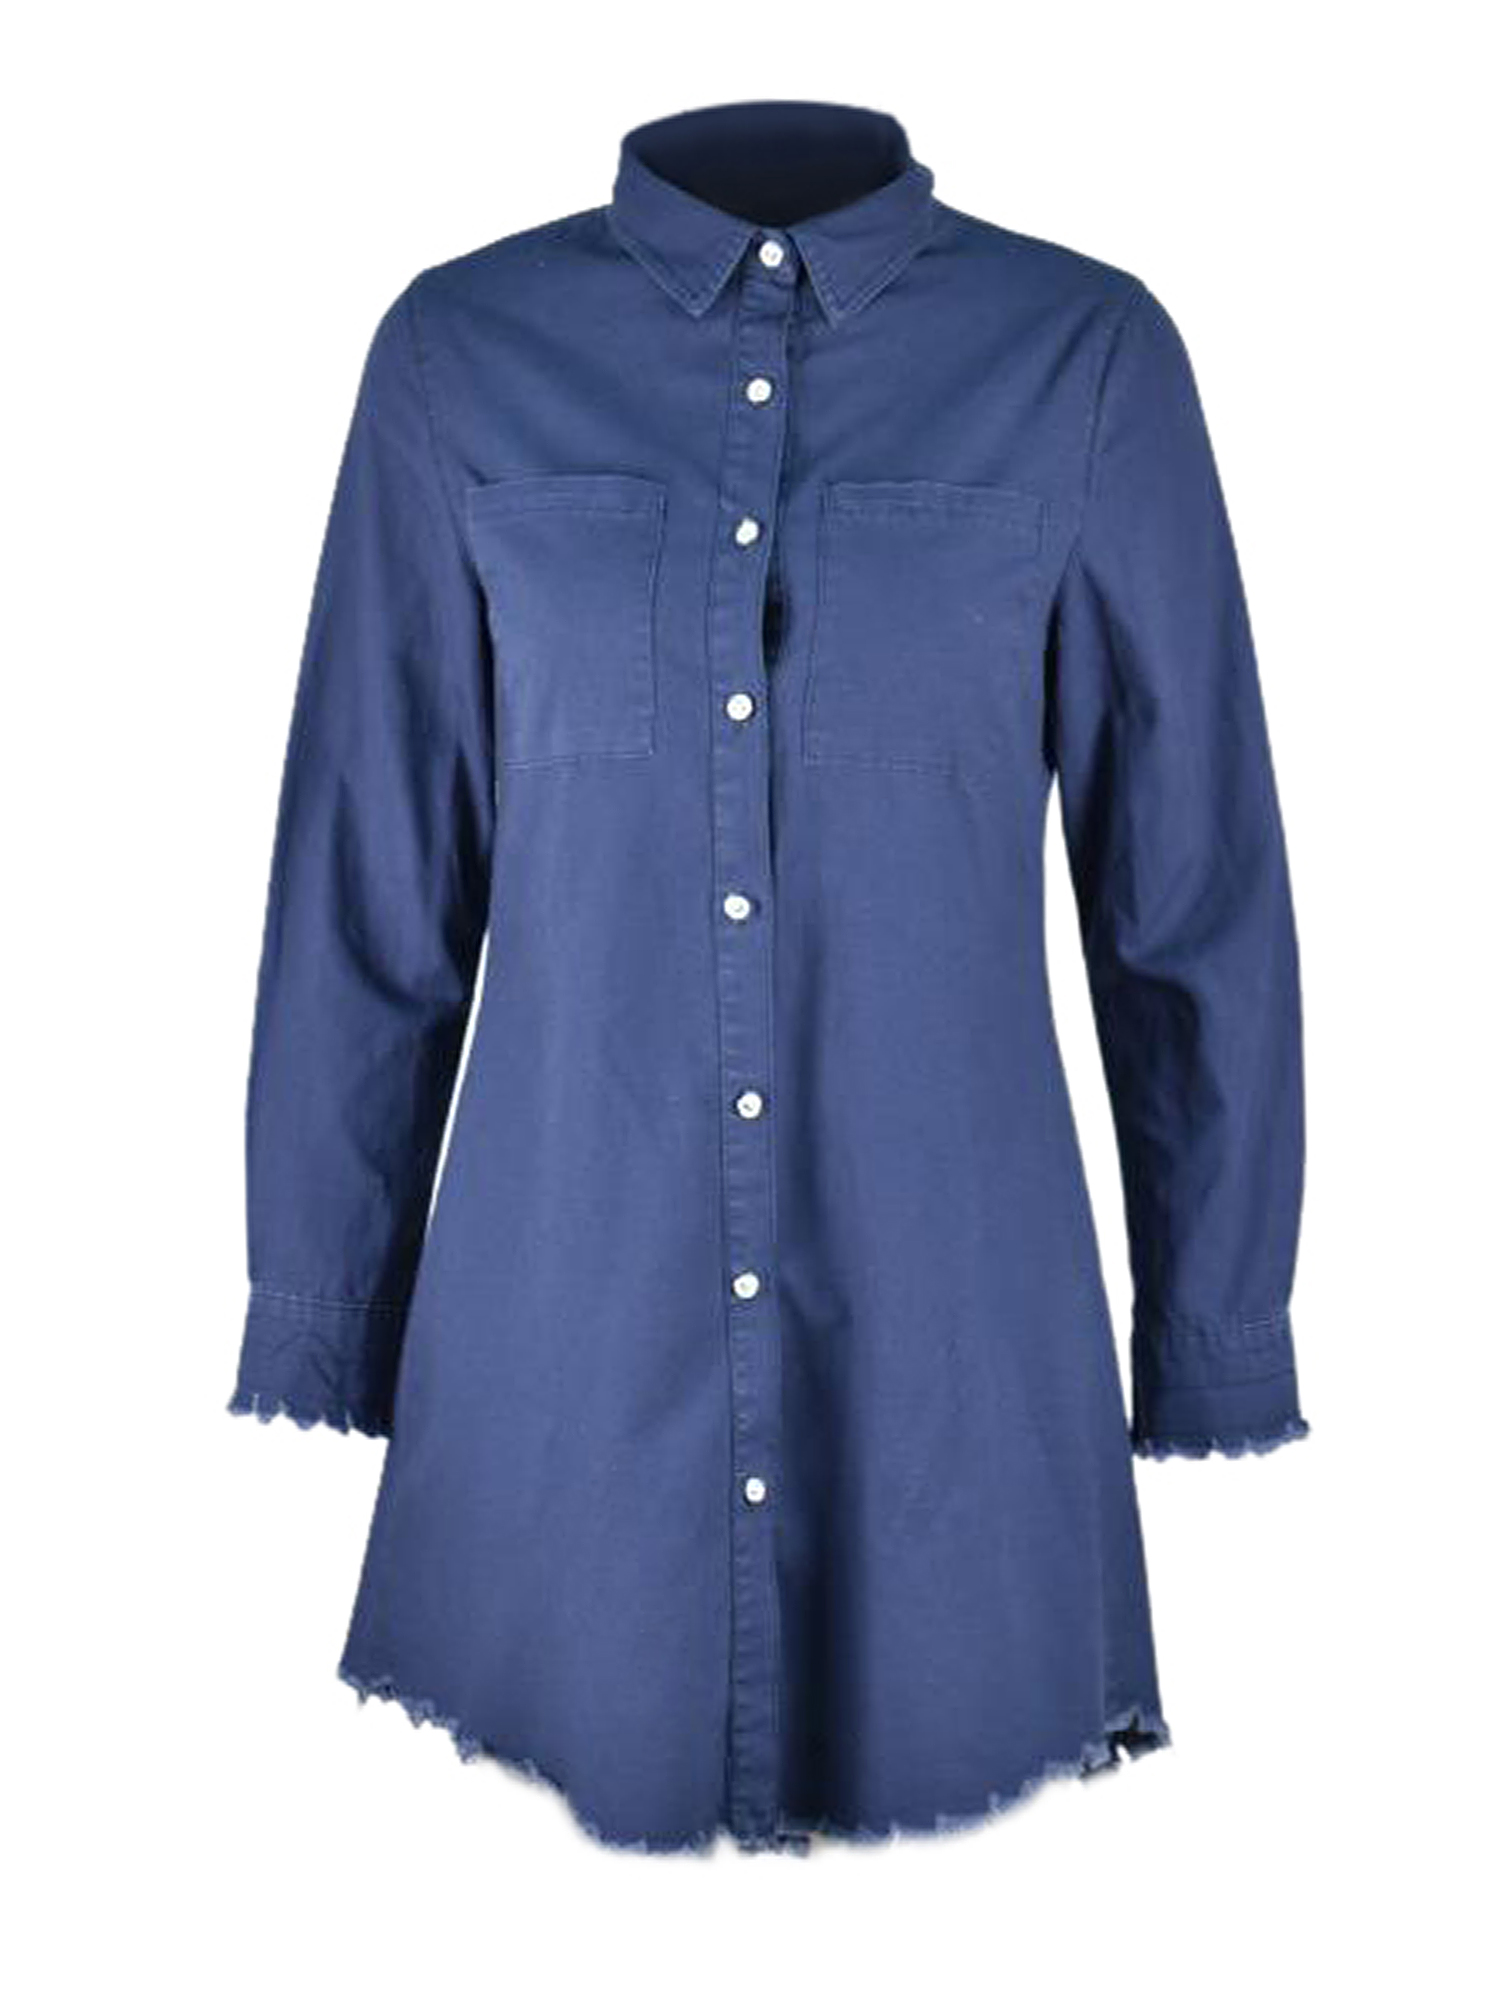 Oversize Thin Denim Jacket for Women Juniors Tassel Jean Jacket Boyfriend Long Sleeve Coat Outwear Tops Ladies Denim Button Lapel V Neck Casual Tunic T-Shirt - image 4 of 4